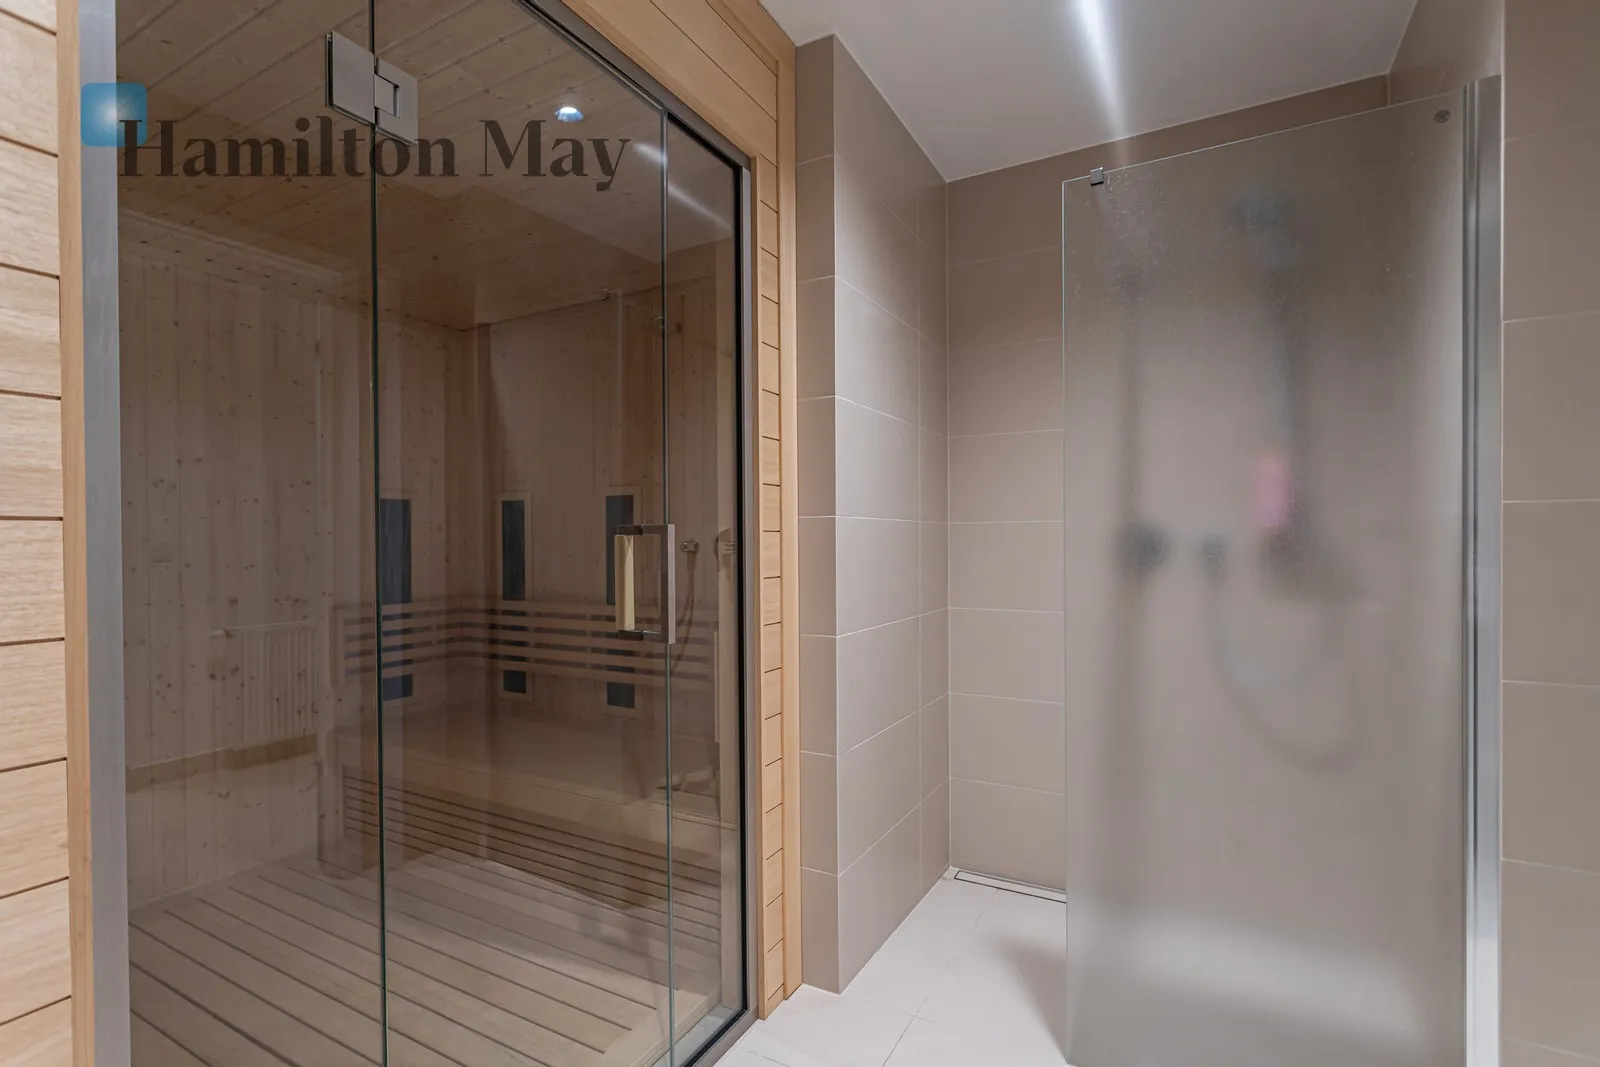 Level: 1 Price: 4000 PLN Bedrooms: 1 Bathrooms: 1 Size: 46m2